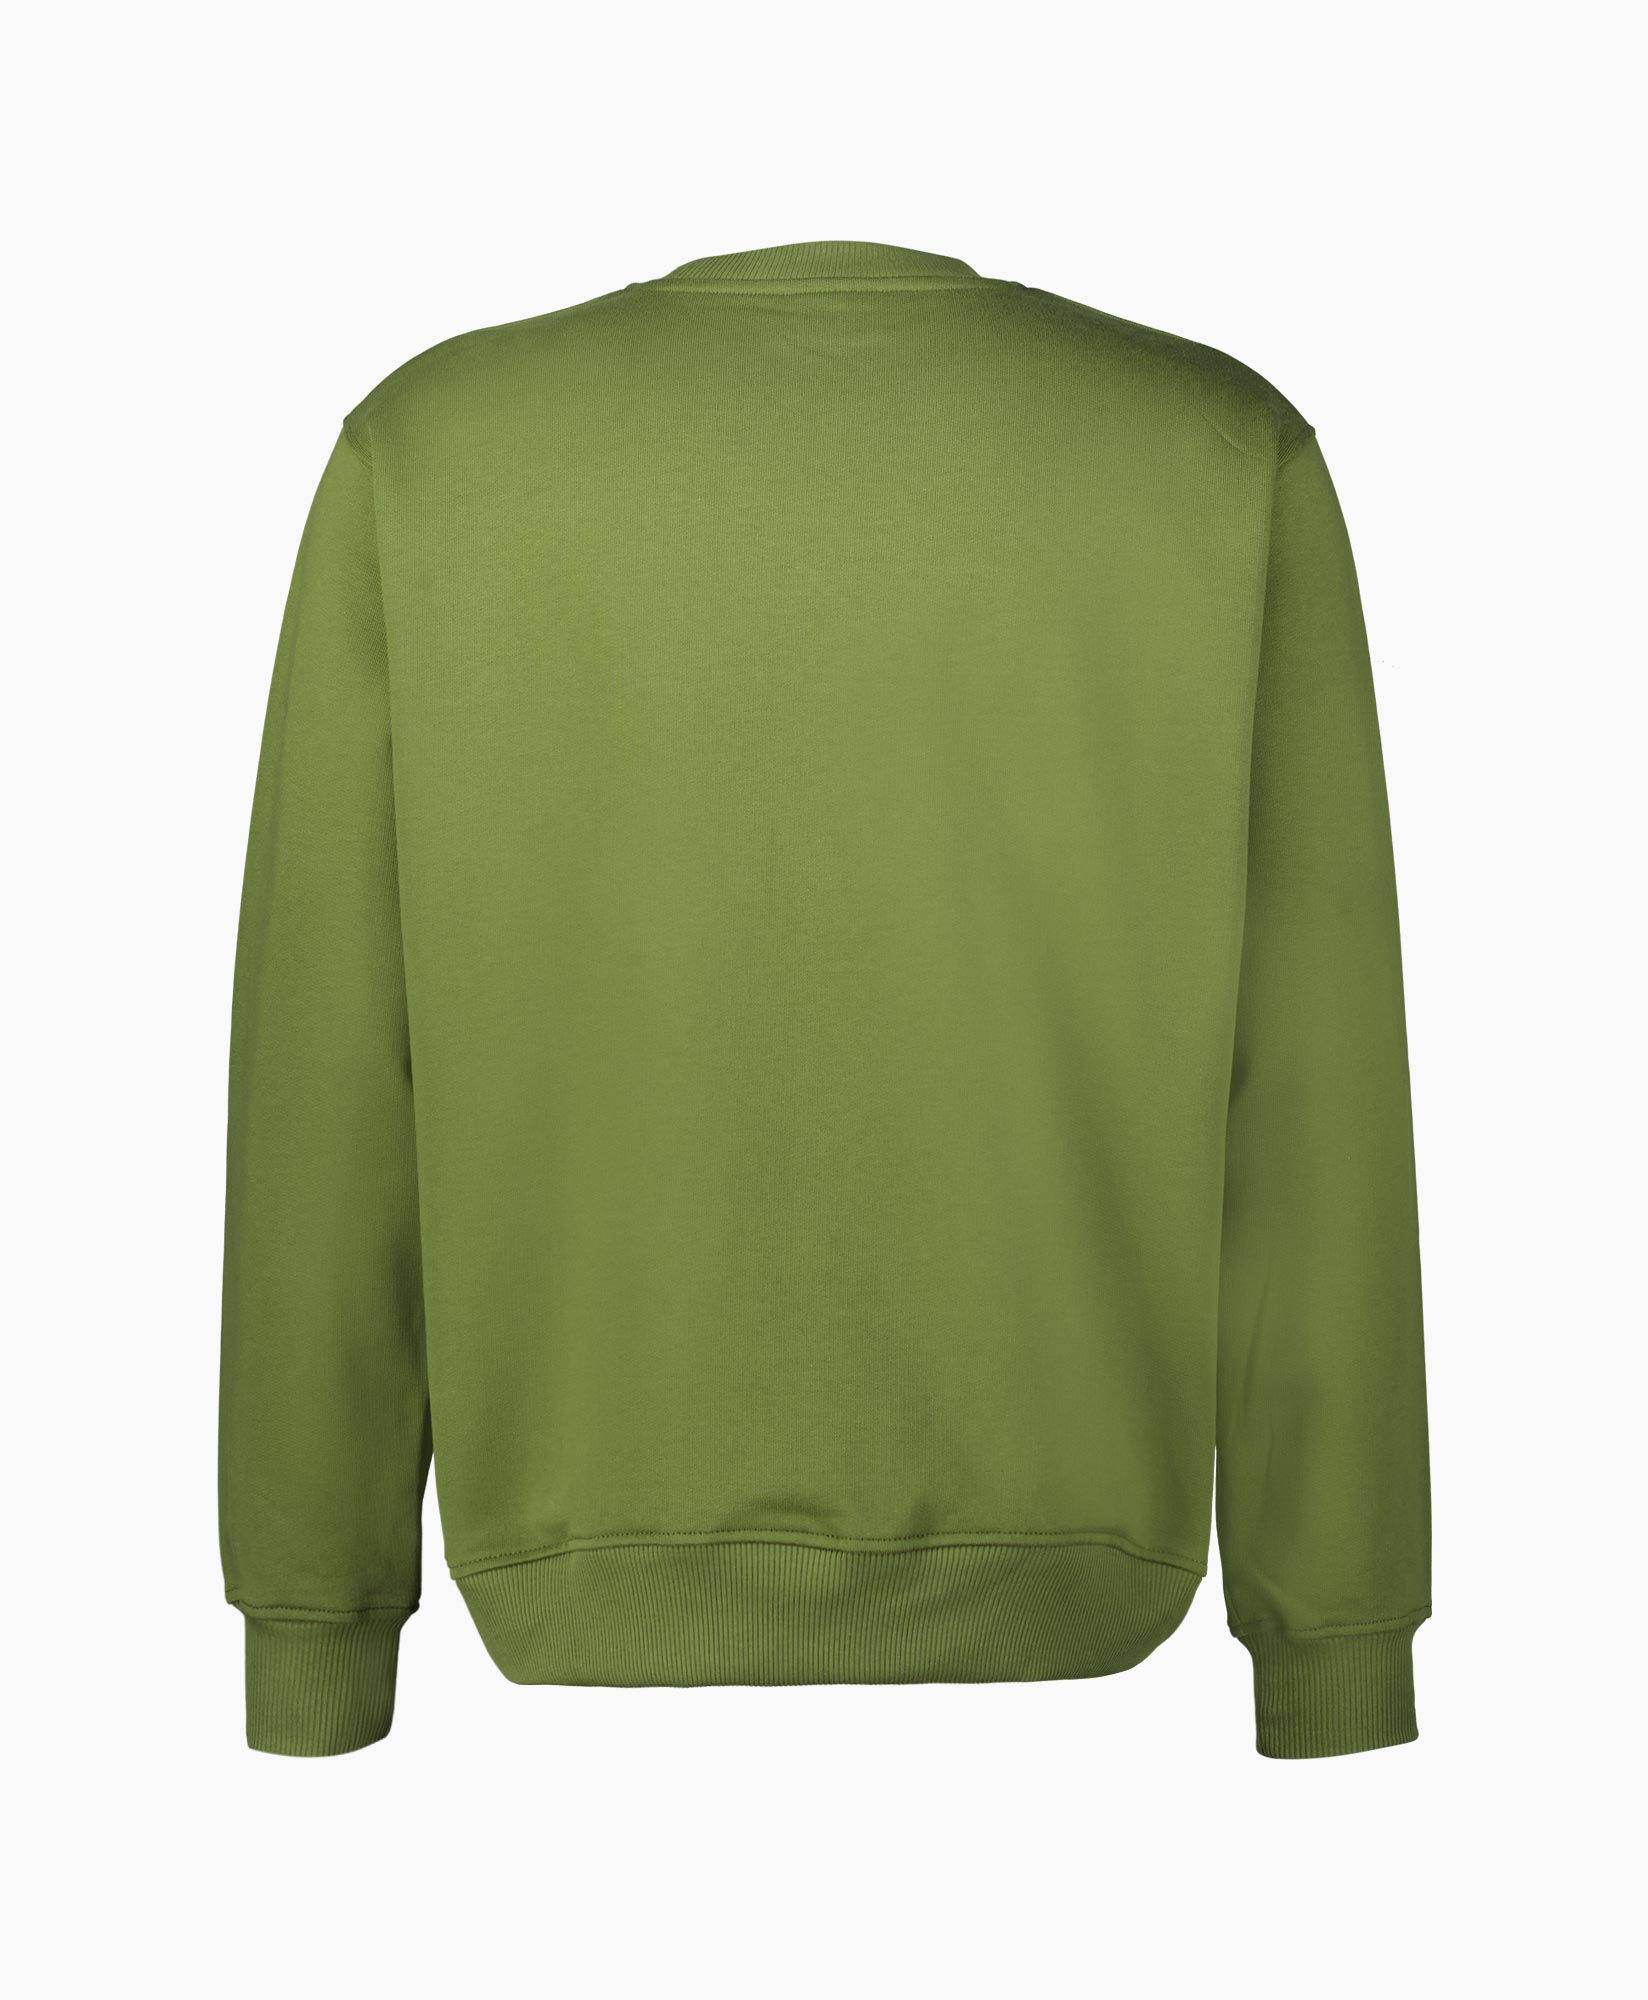 Sweater Le Sweatshirt Slogan Khaki